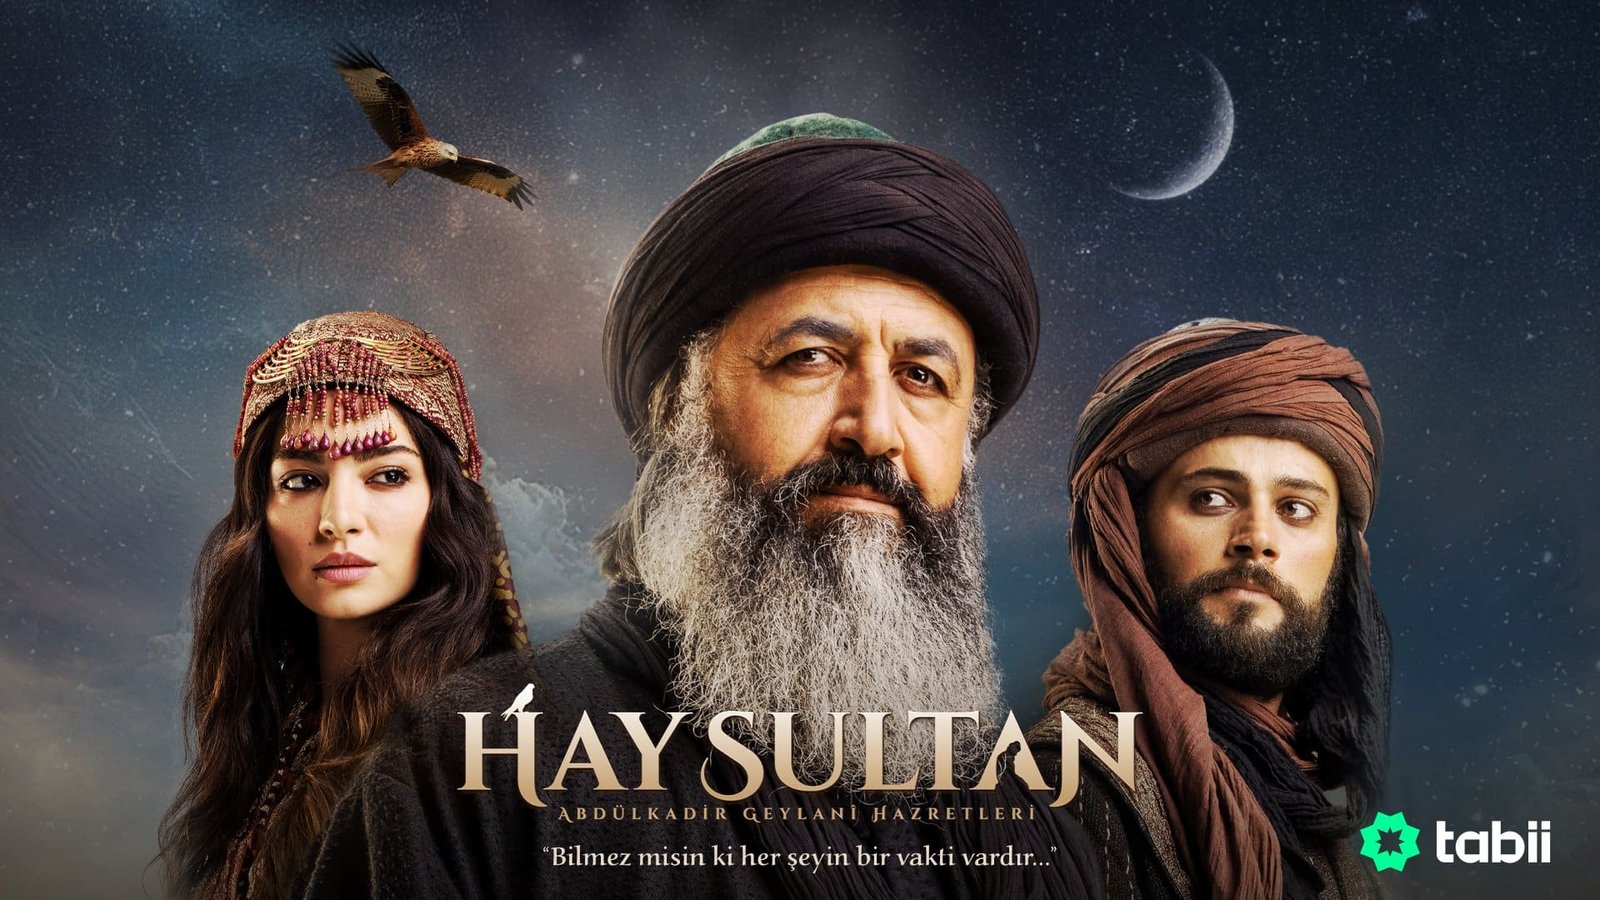 Hay Sultan Abdulkadir Geylani Episode 5 English Subtitles